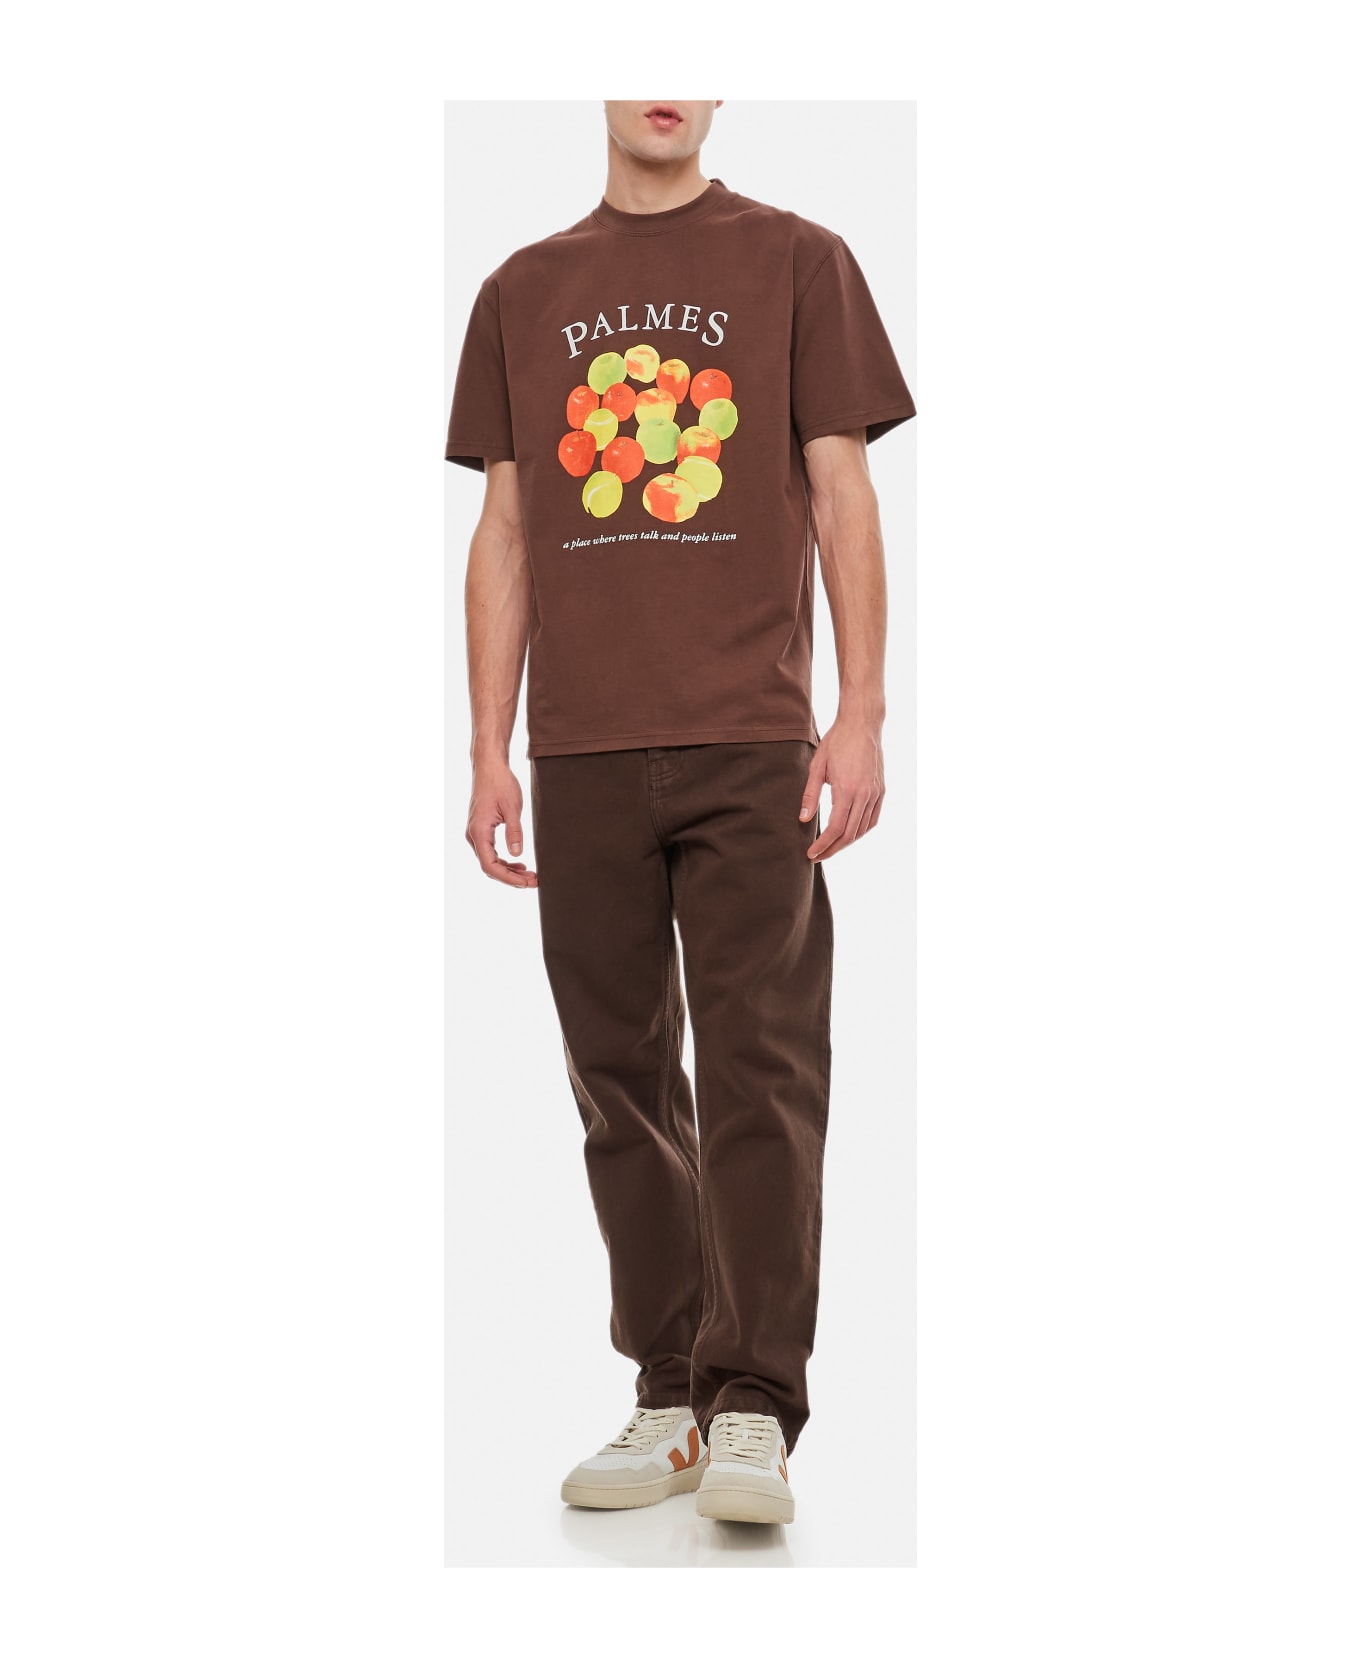 Palmes Cotton Apple T-shirt - Brown